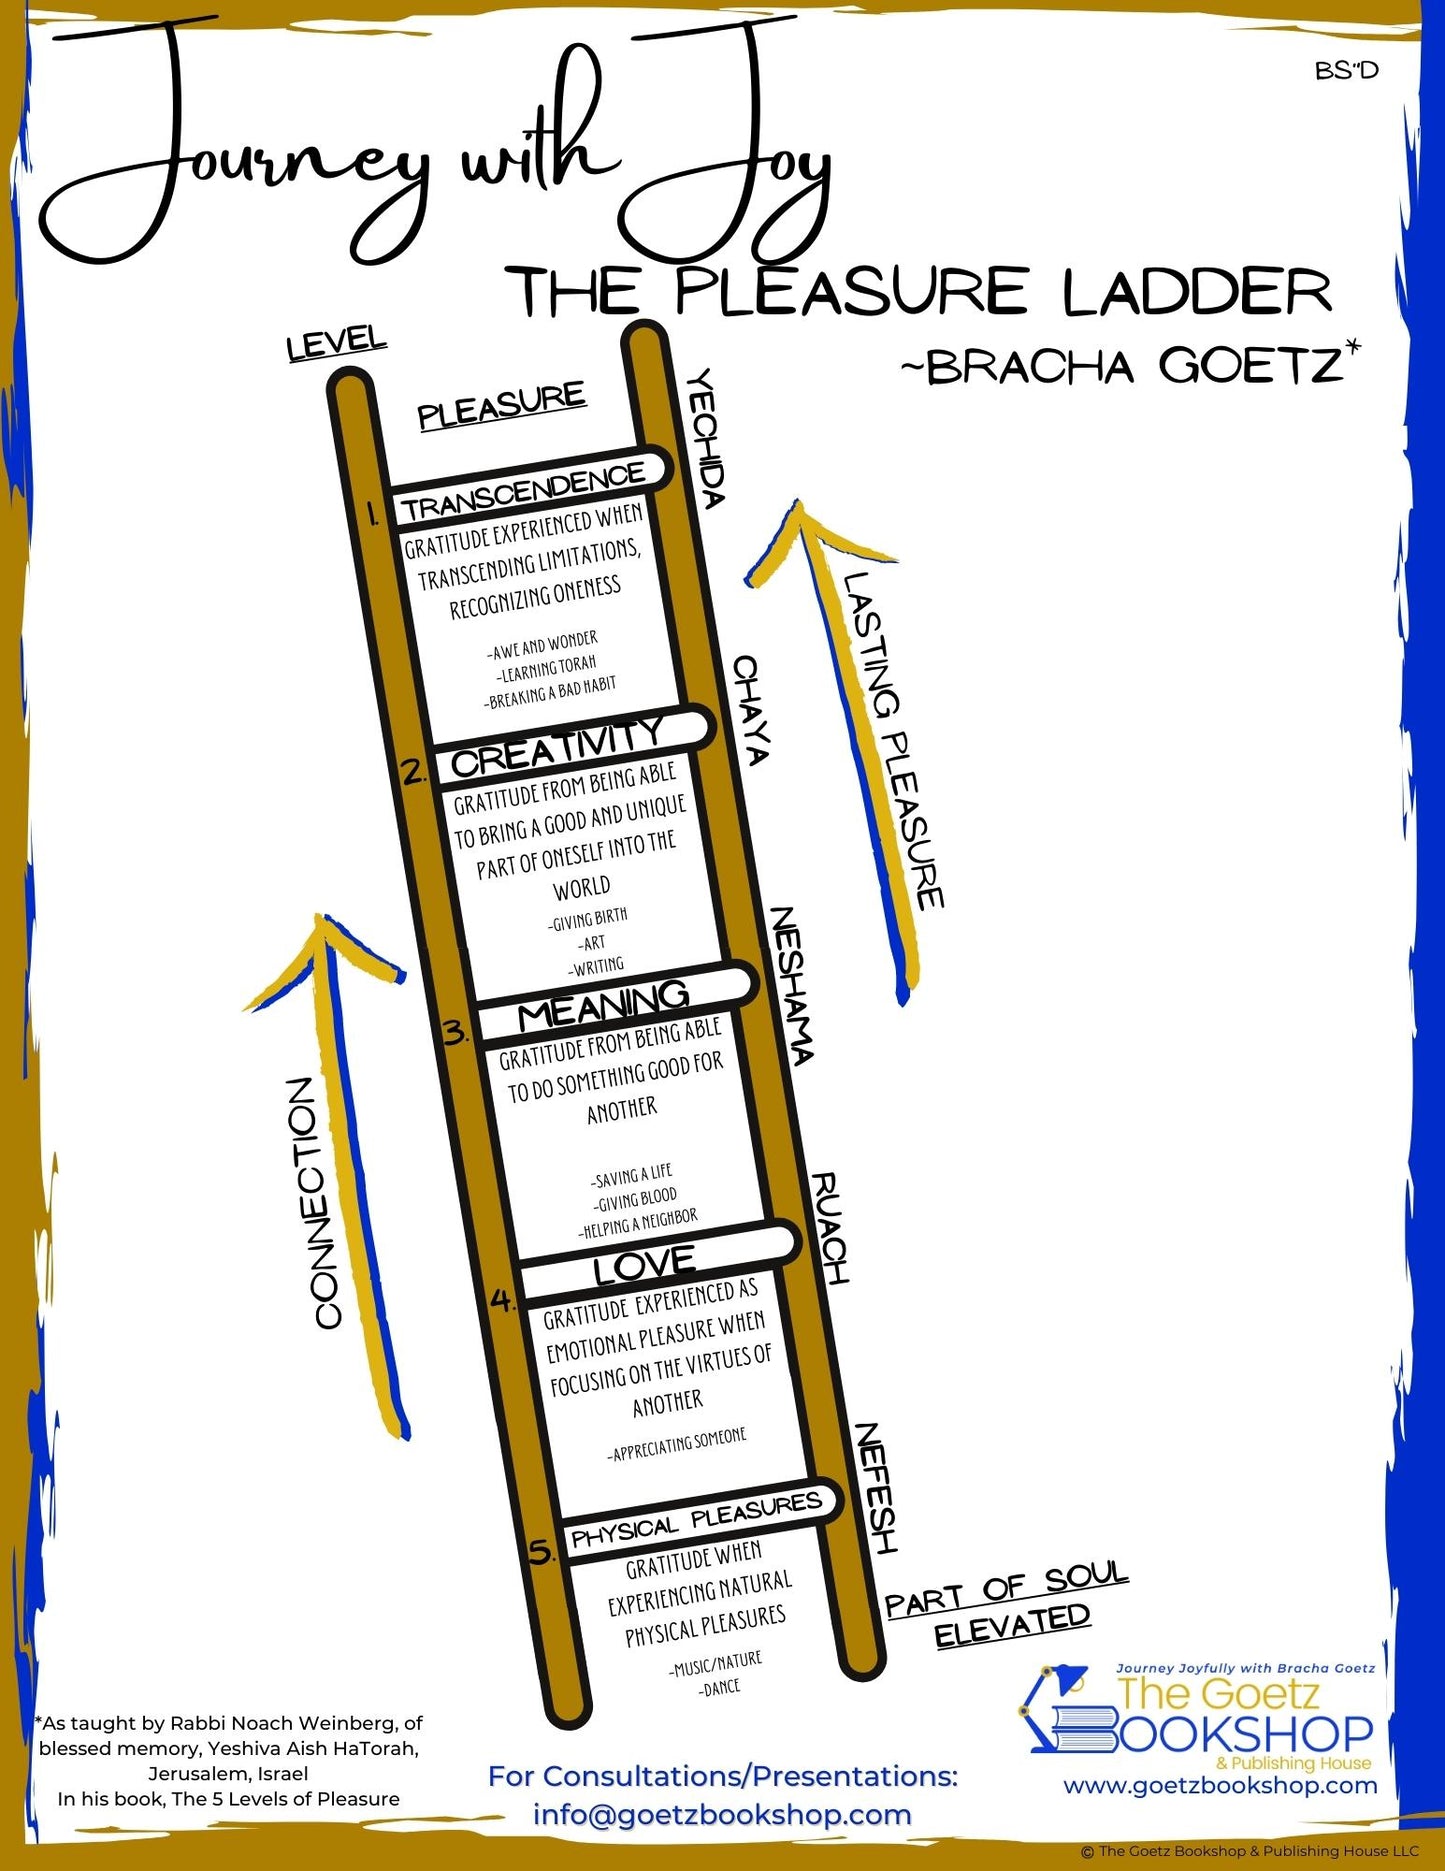 The Pleasure Ladder